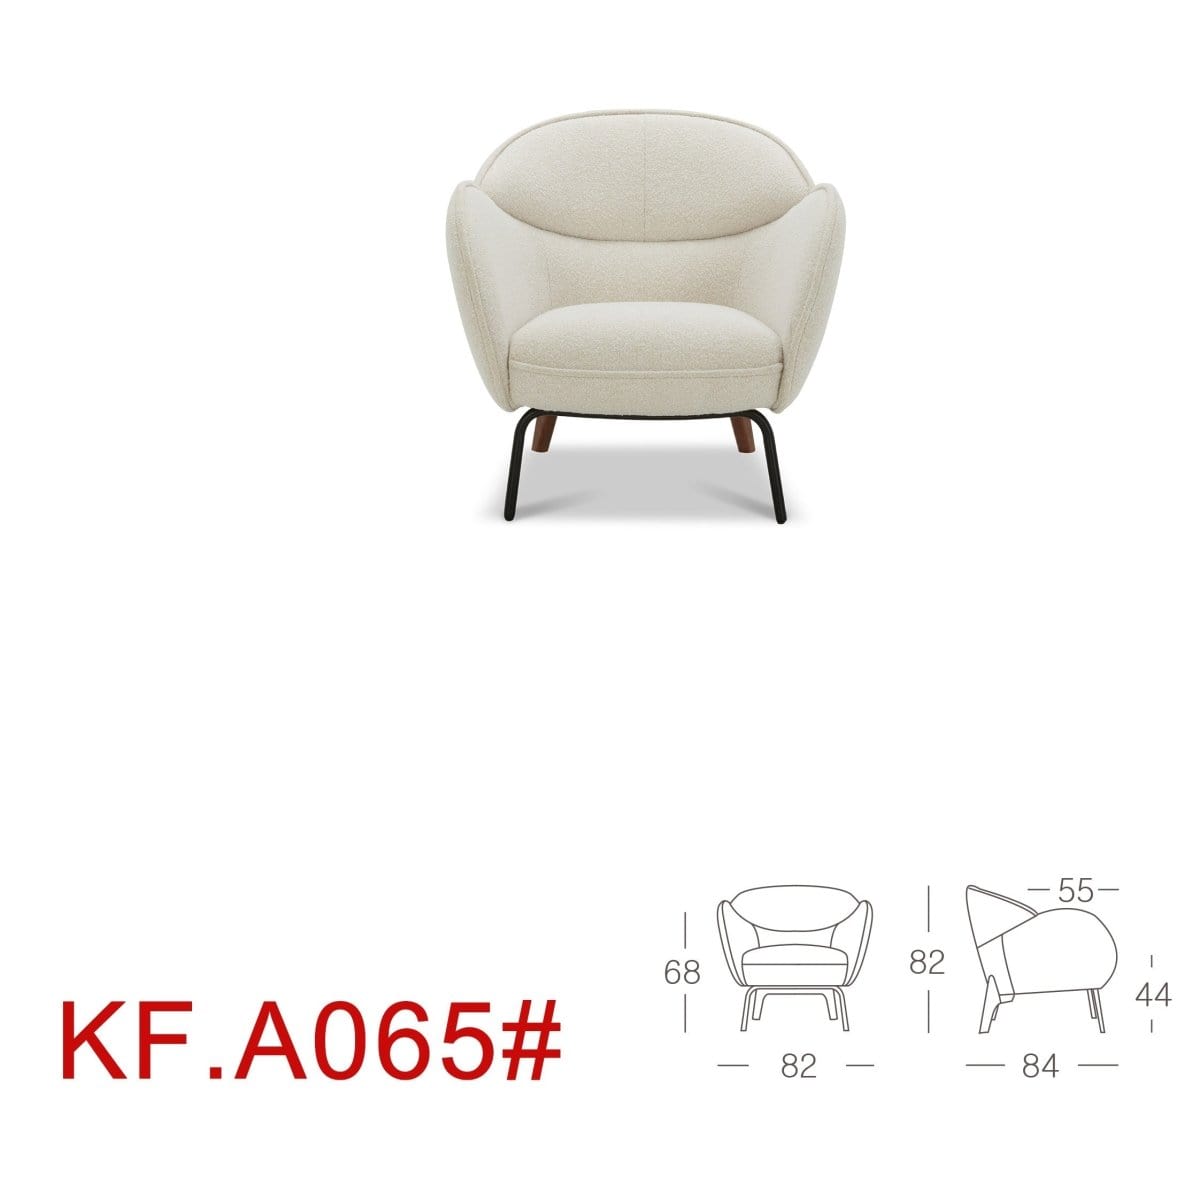 KUKA #KF.A065 Fabric Lounge Chair (Fabric C) (I) picket and rail